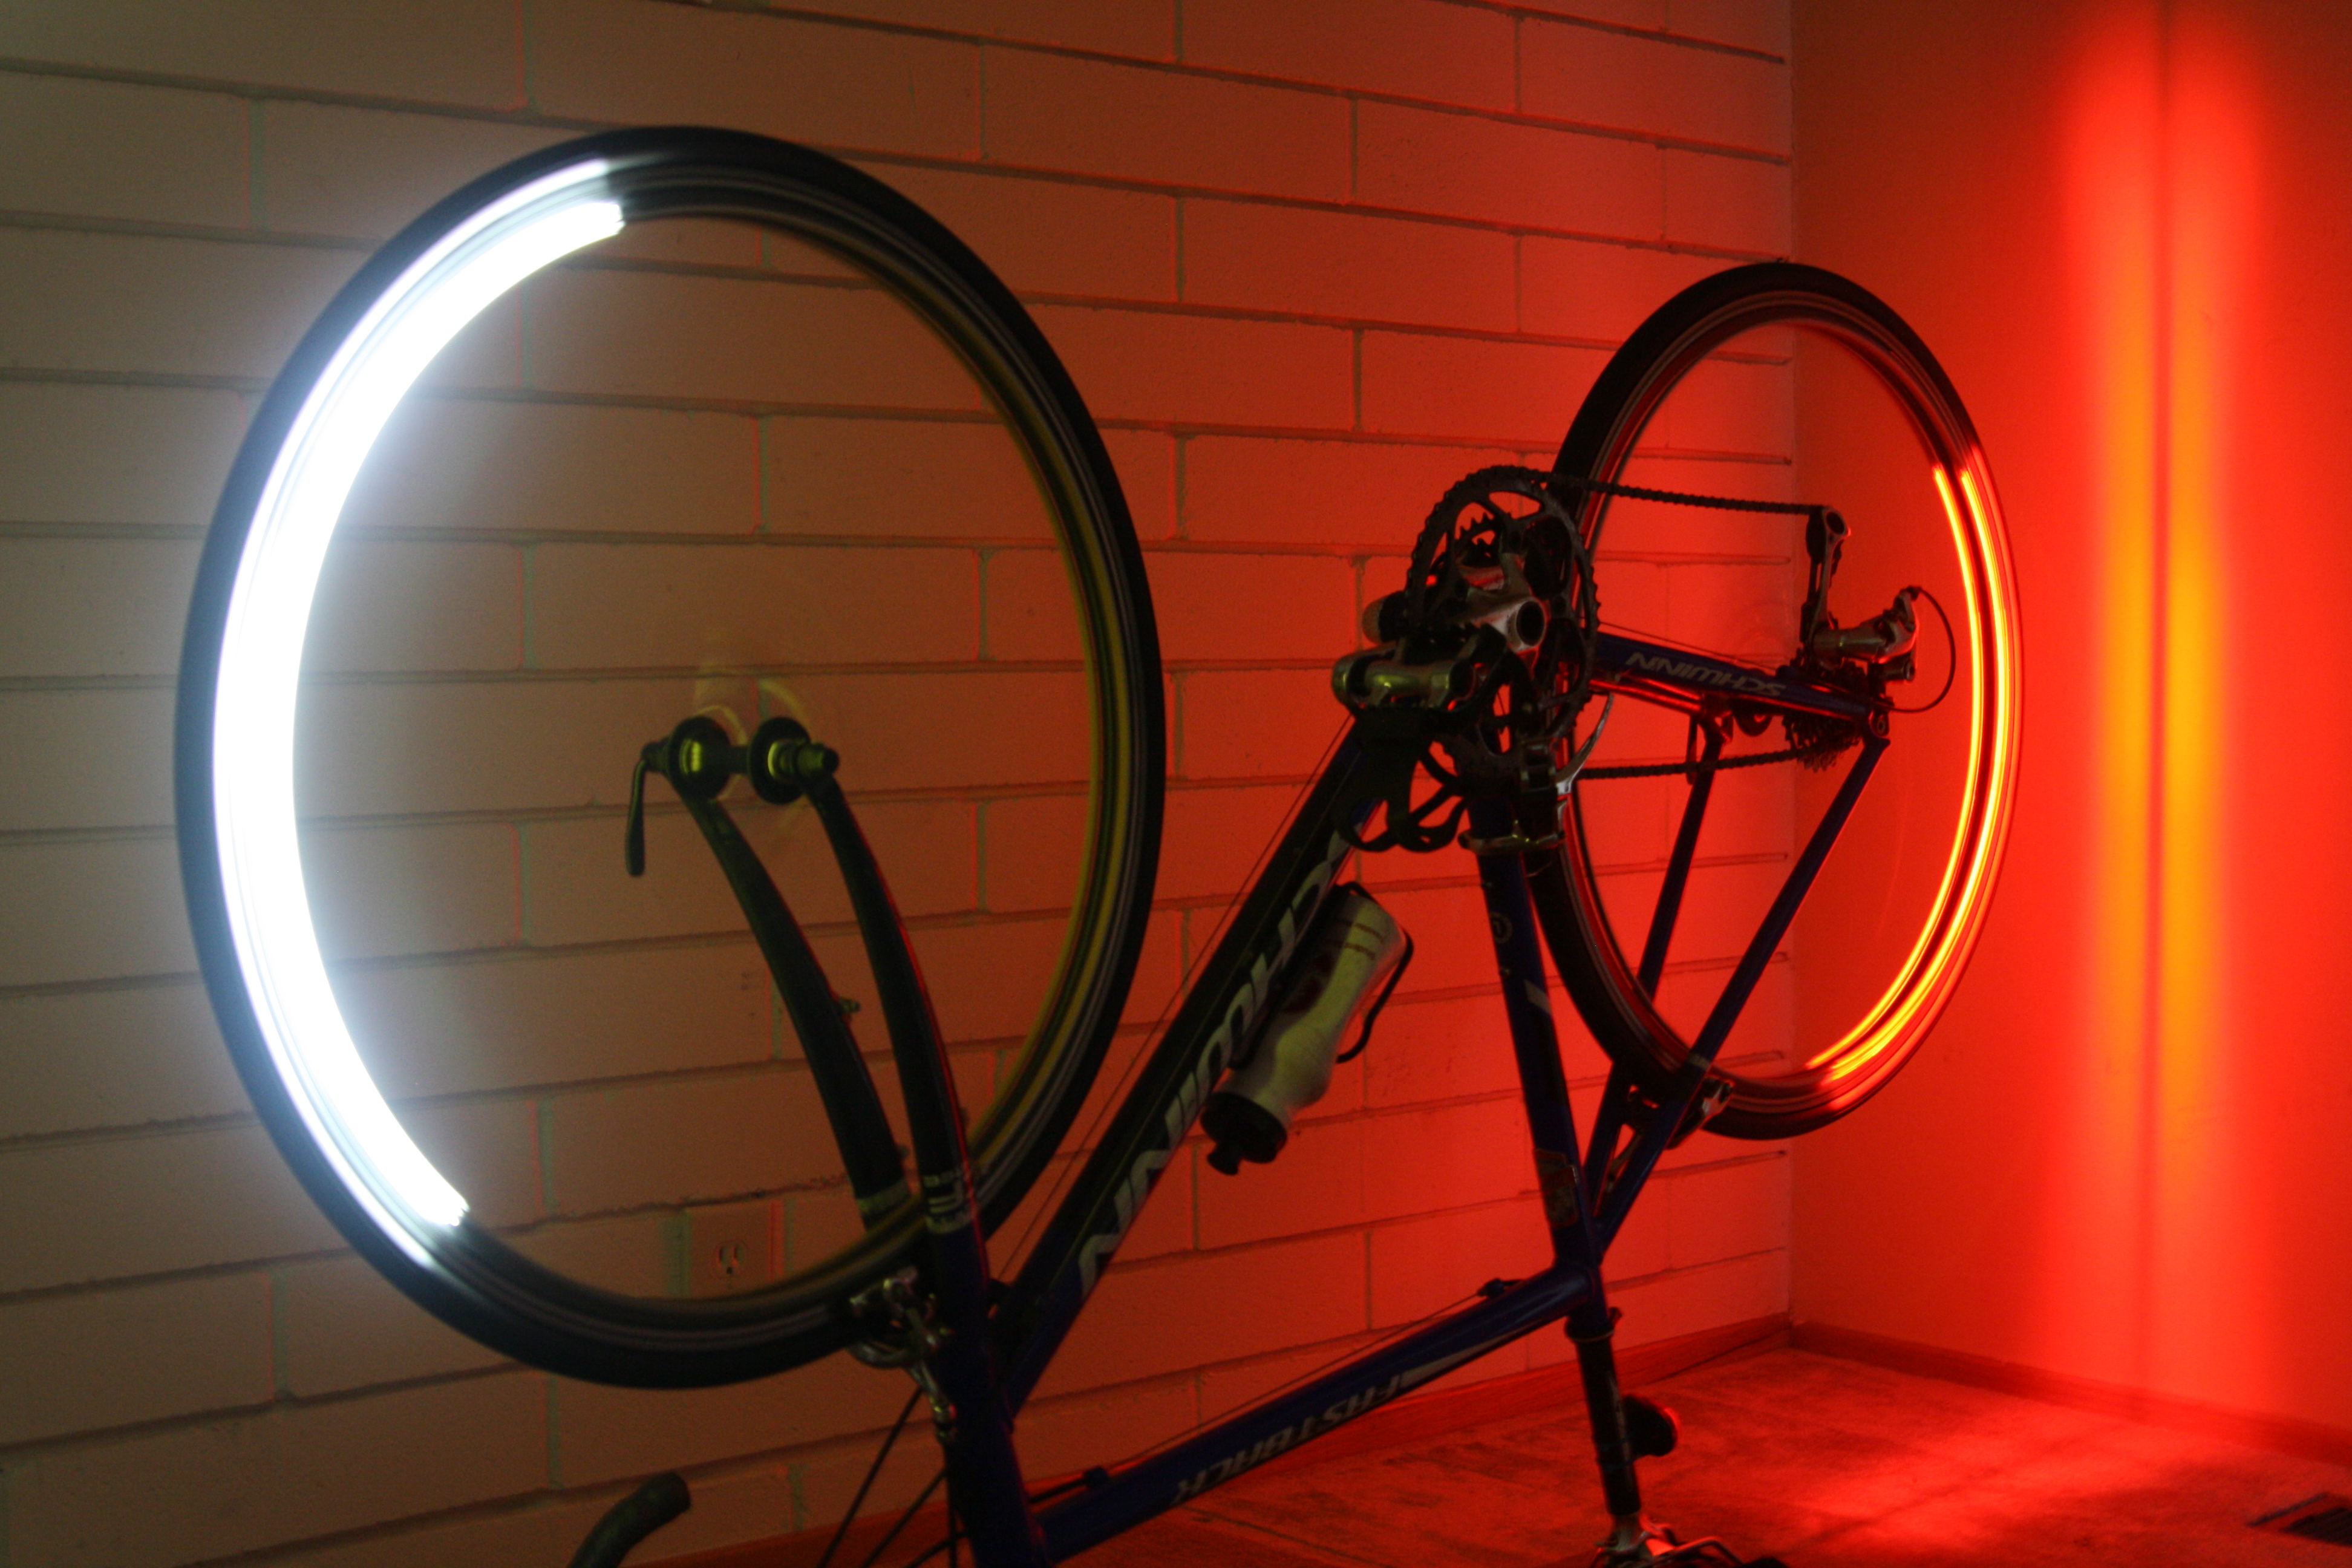 revo lights for bikes